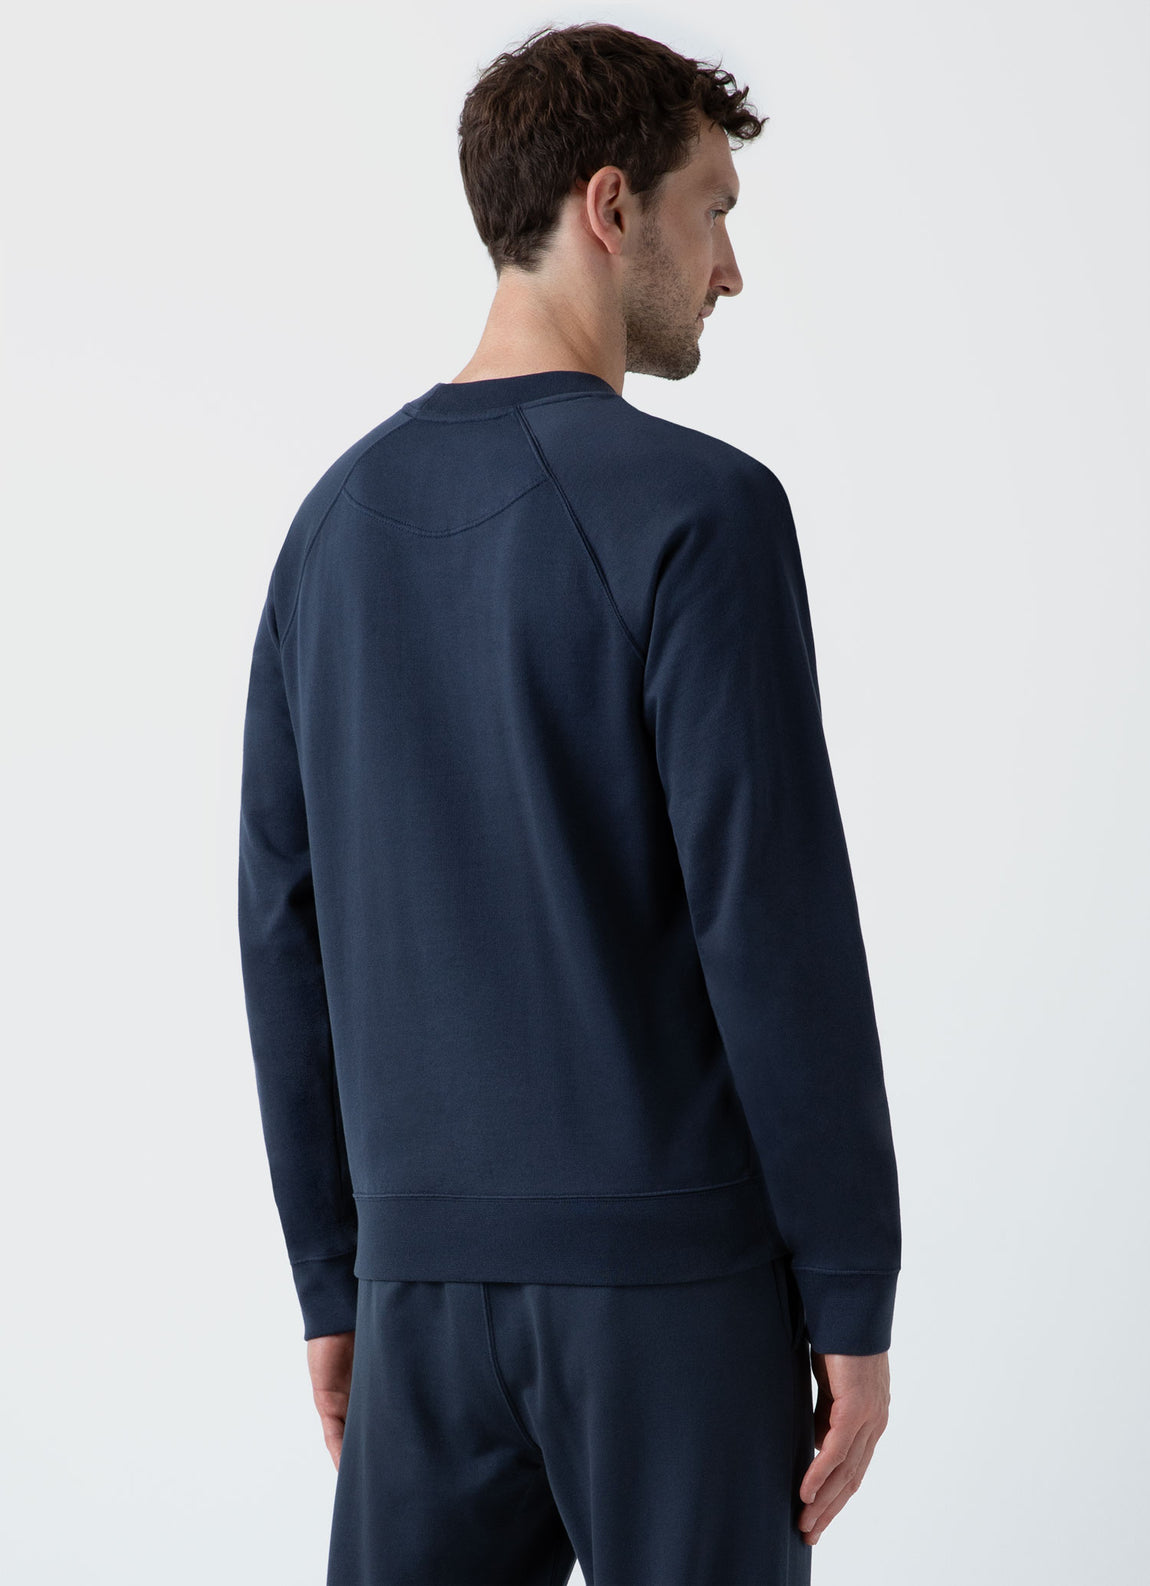 Men's Sea Island Cotton Sweatshirt in Navy | Sunspel